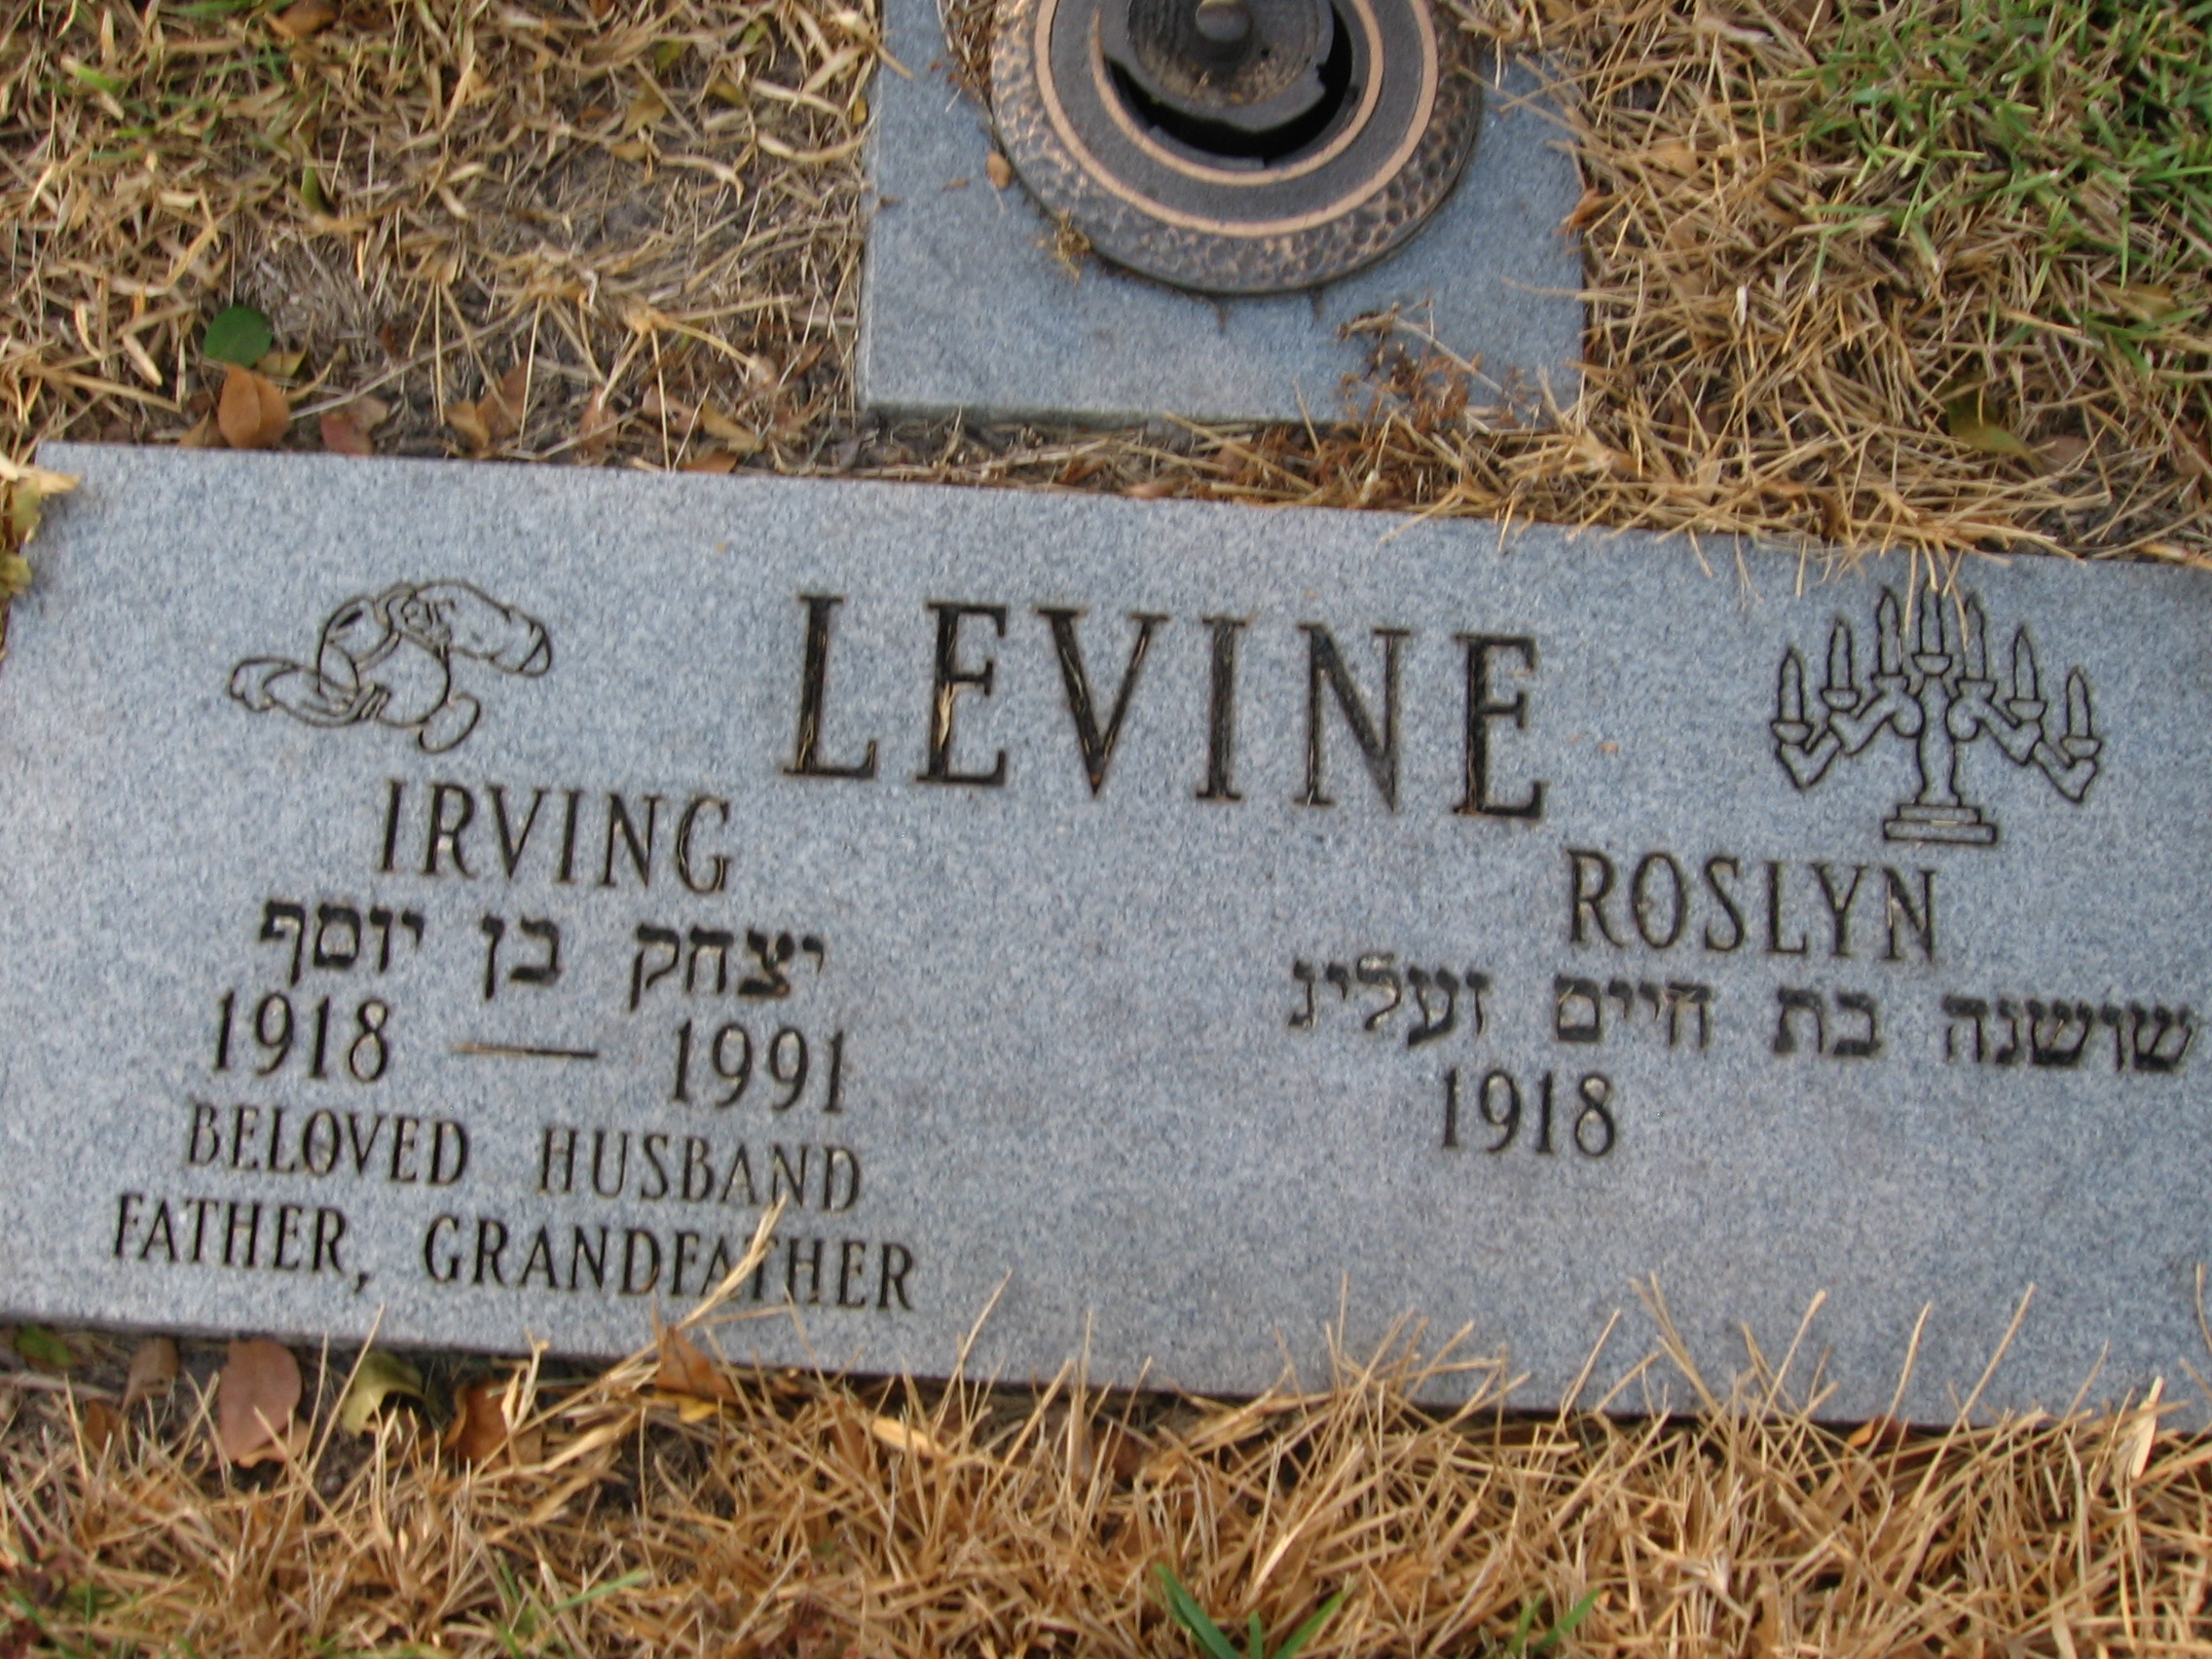 Irving Levine